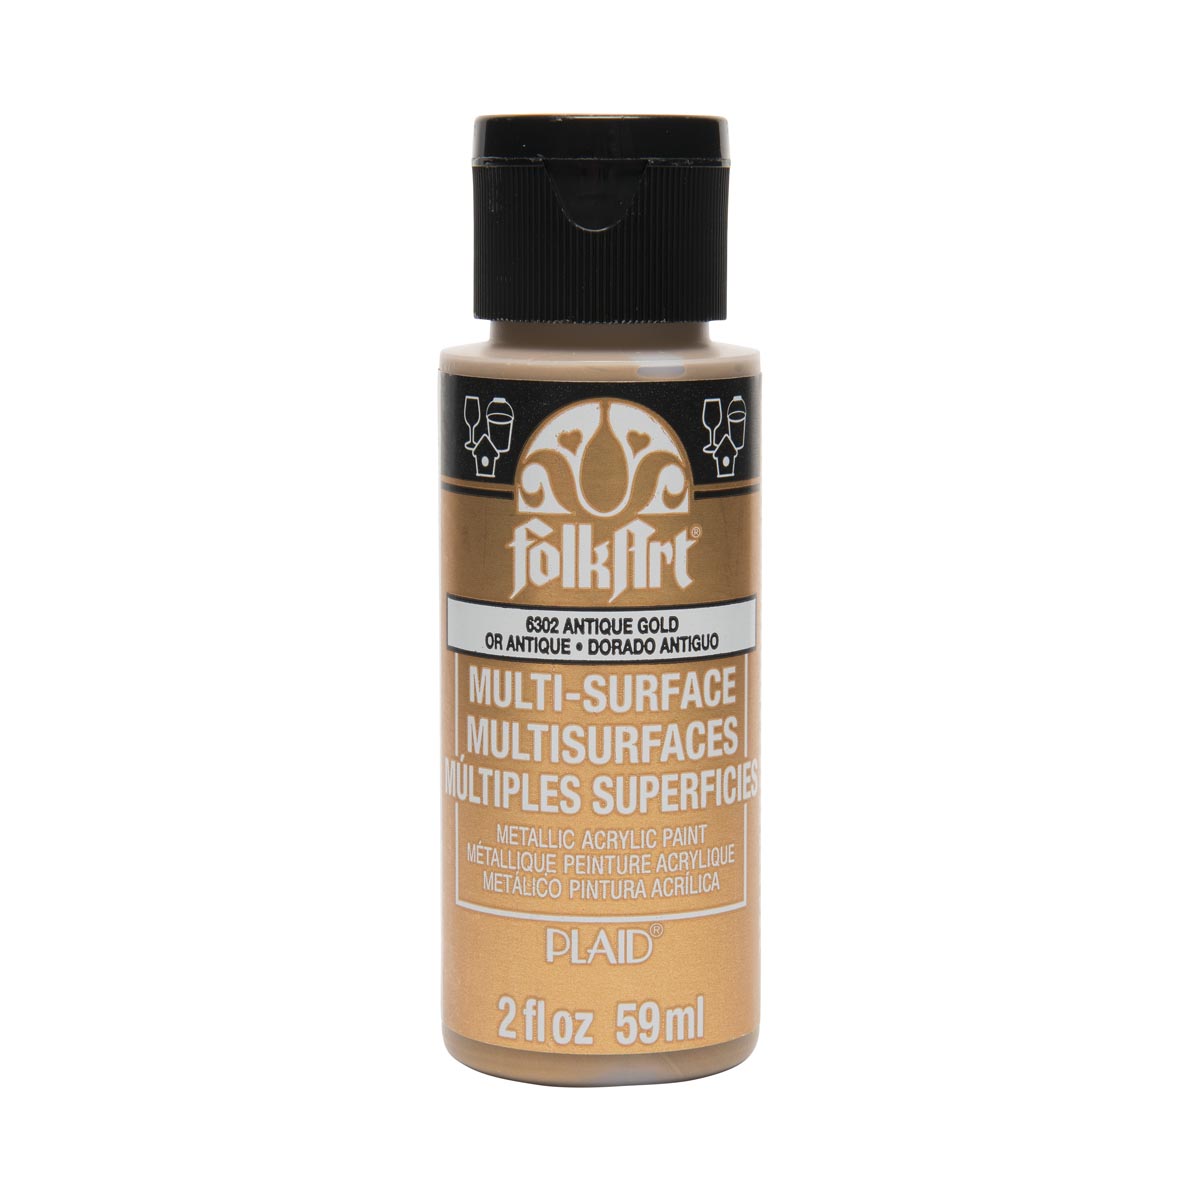 FolkArt ® Multi-Surface Metallic Acrylic Paints - Anitque Gold, 2 oz. - 6302